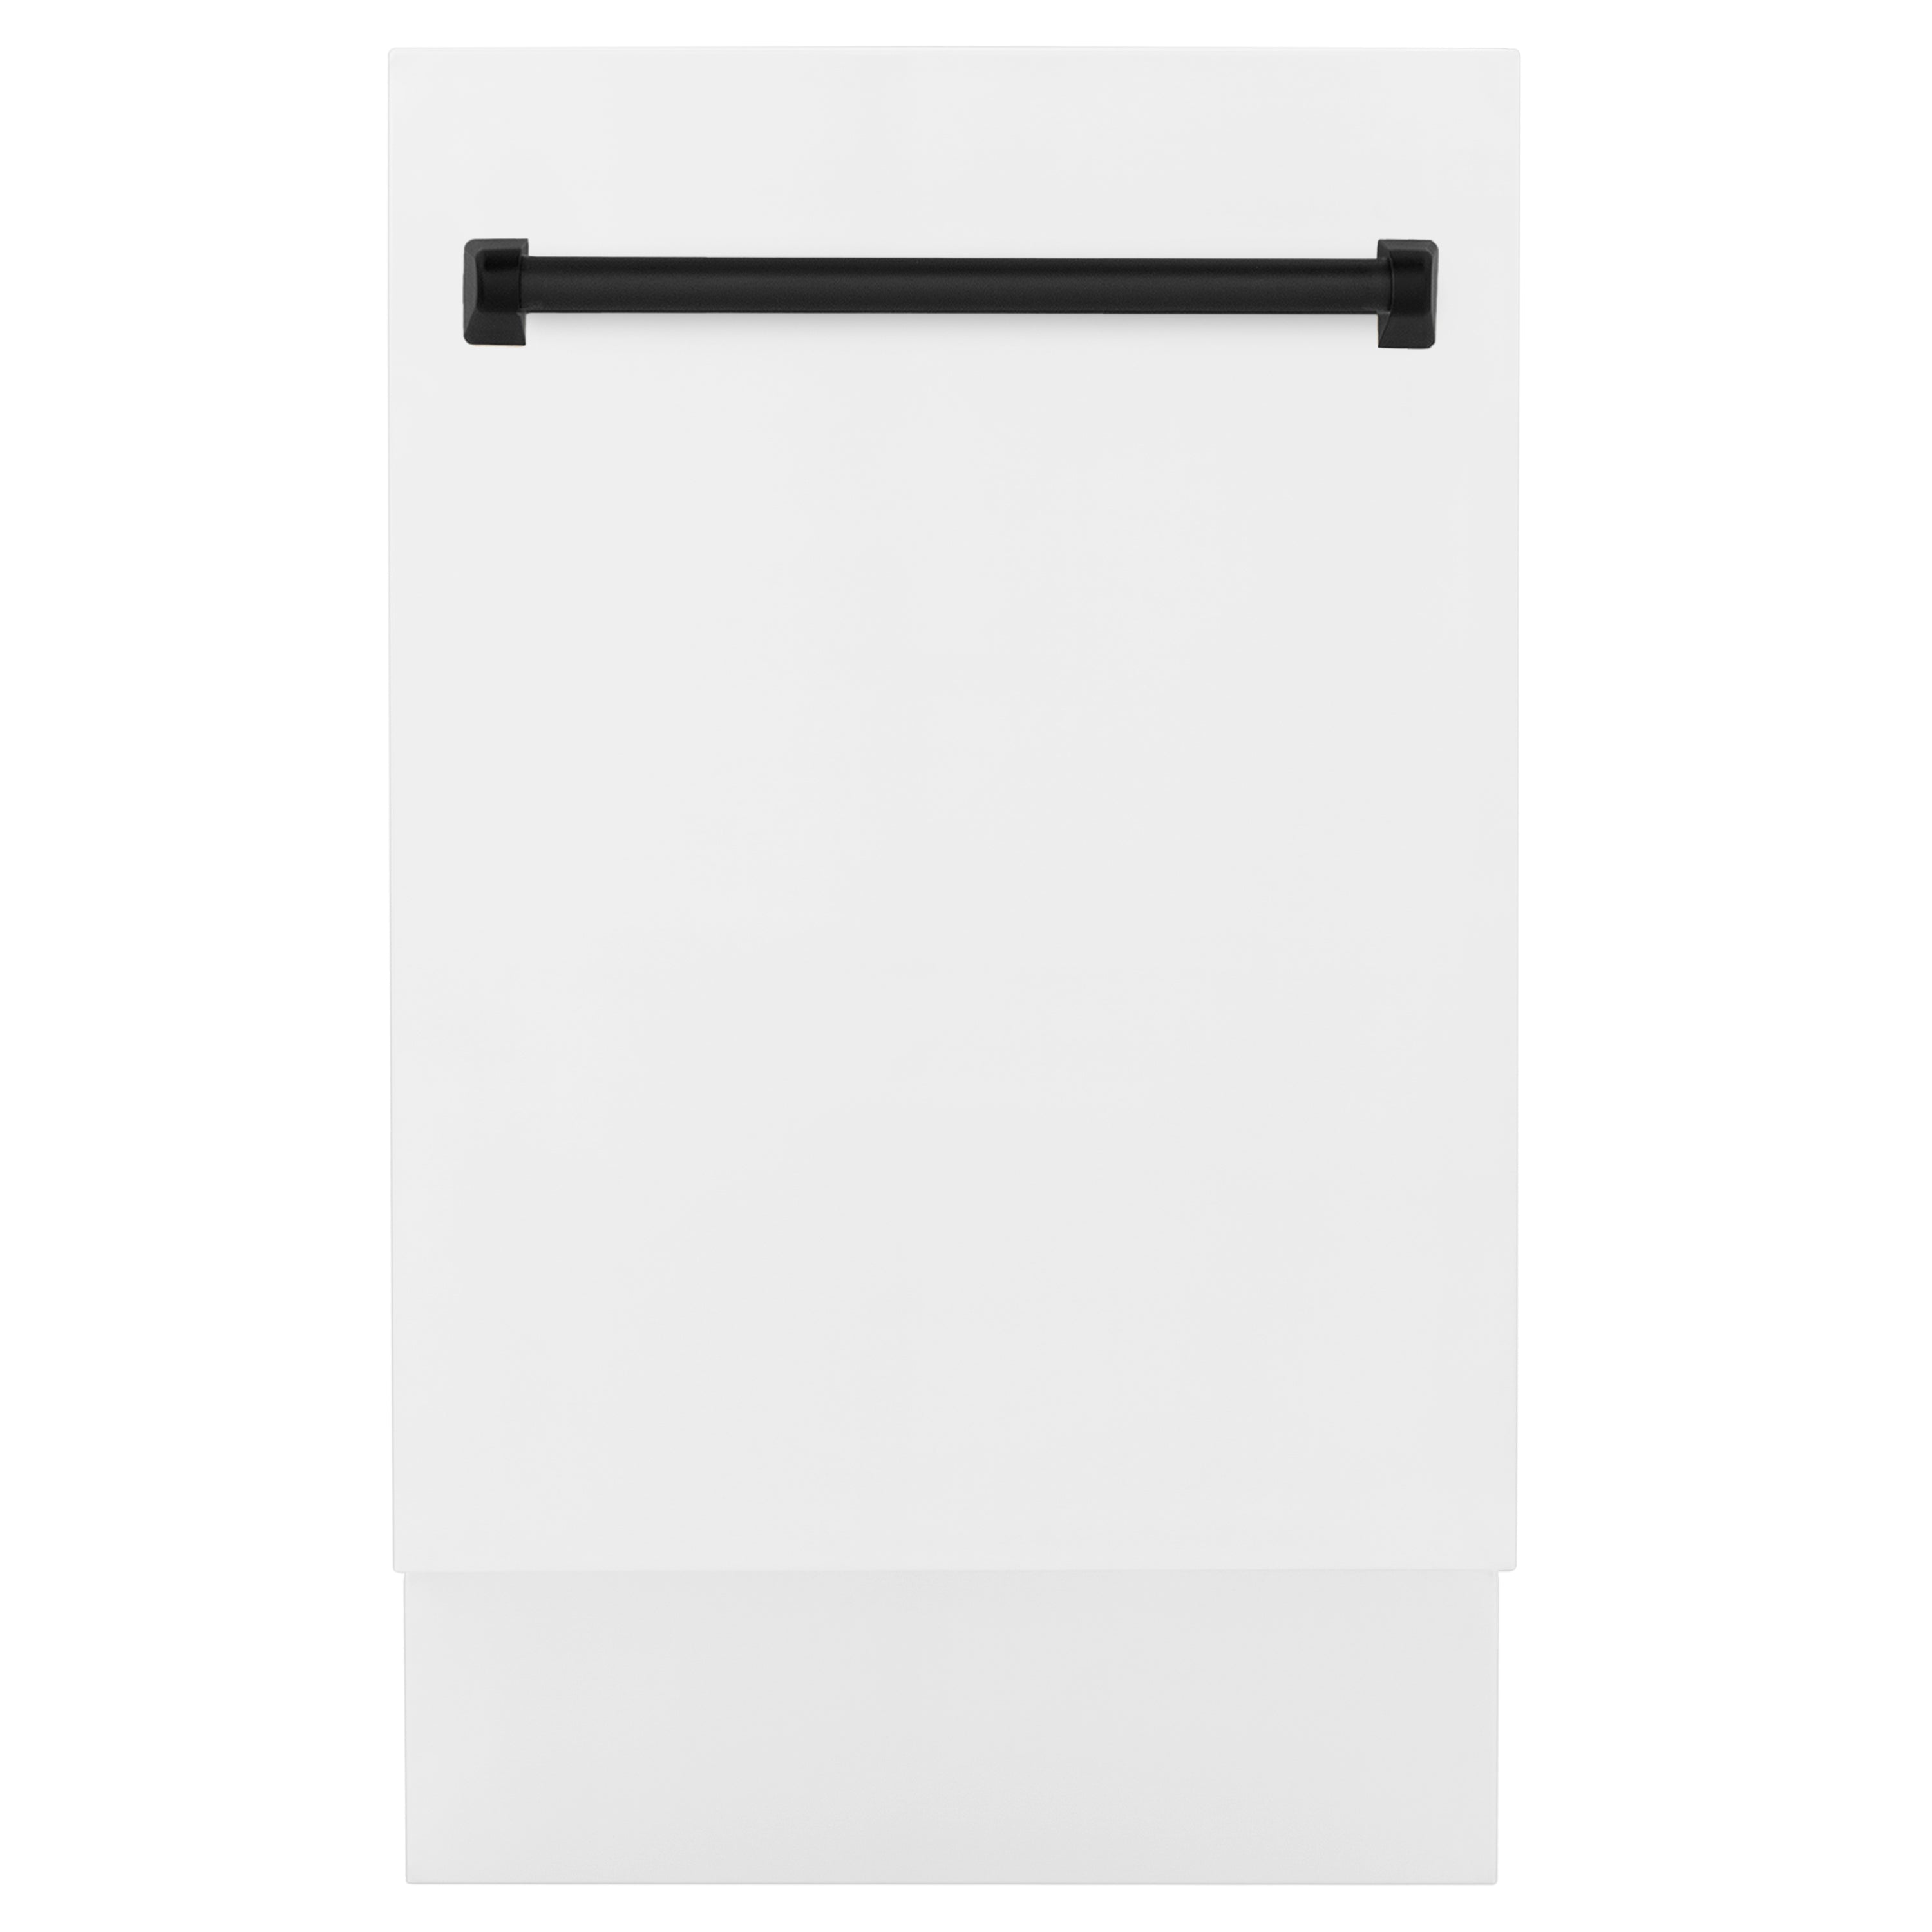 ZLINE Autograph Edition 18" Compact 3rd Rack Top Control Dishwasher in White Matte with Matte Black Handle, 51dBa (DWVZ-WM-18-MB)